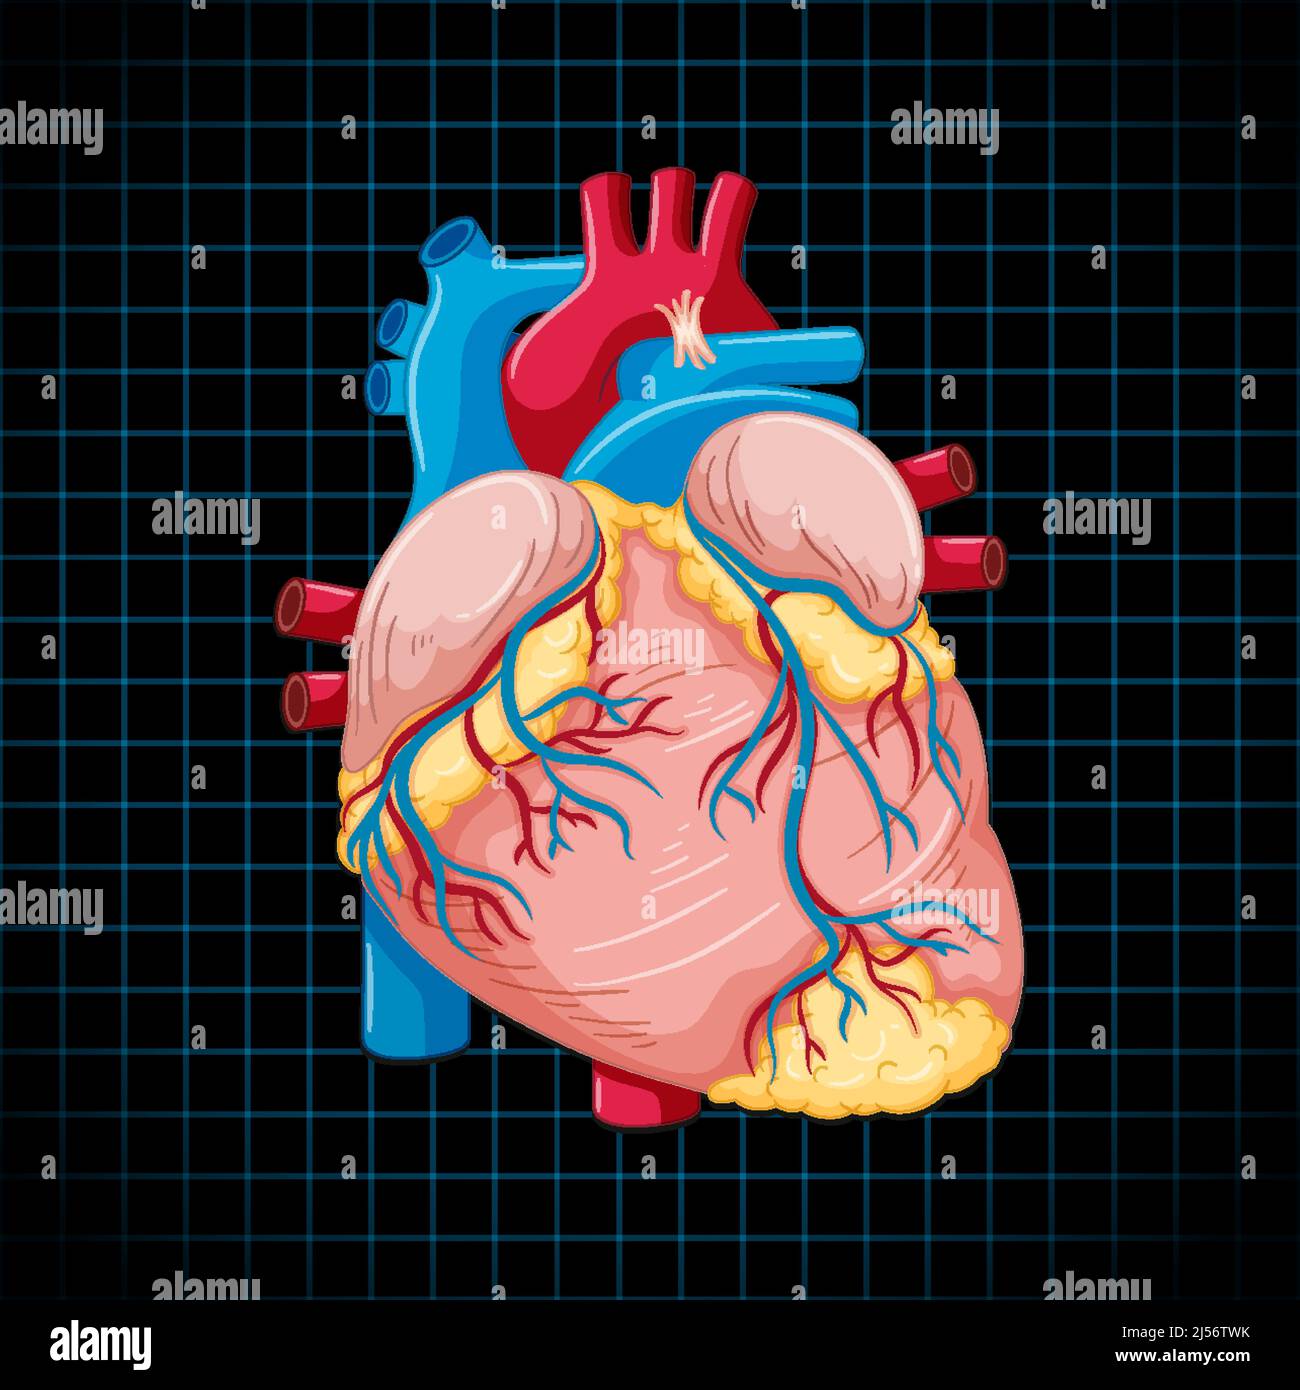 Human internal organ with heart illustration Stock Vector